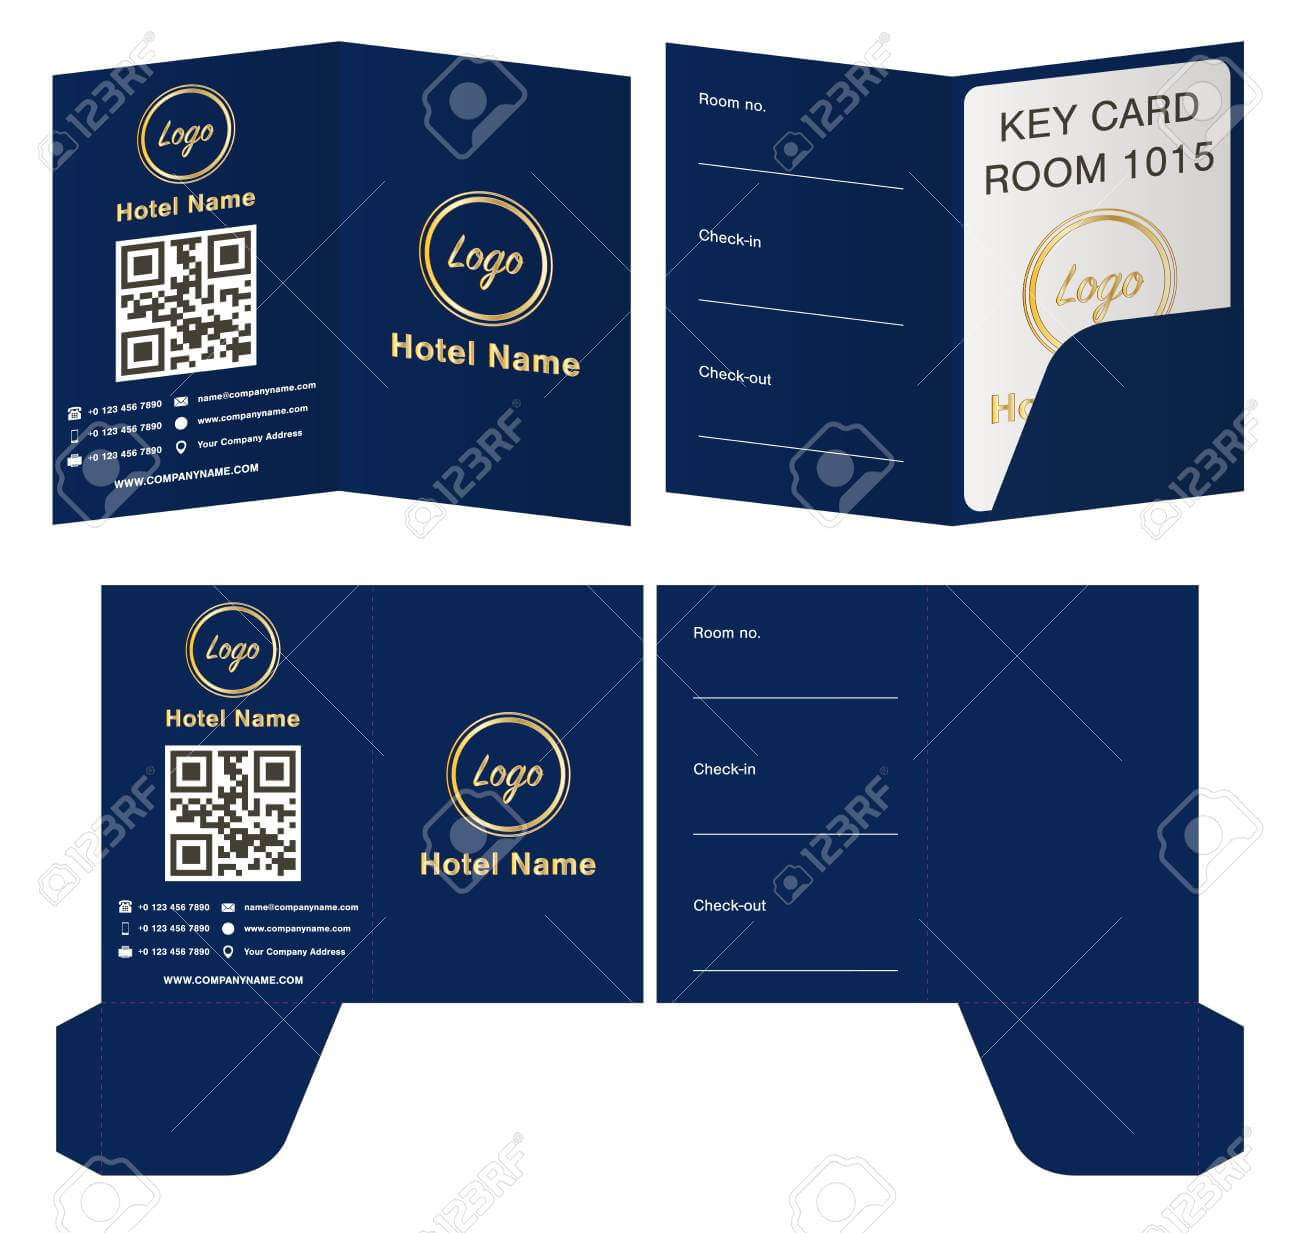 Hotel Key Card Holder Folder Package Template. For Hotel Key Card Template